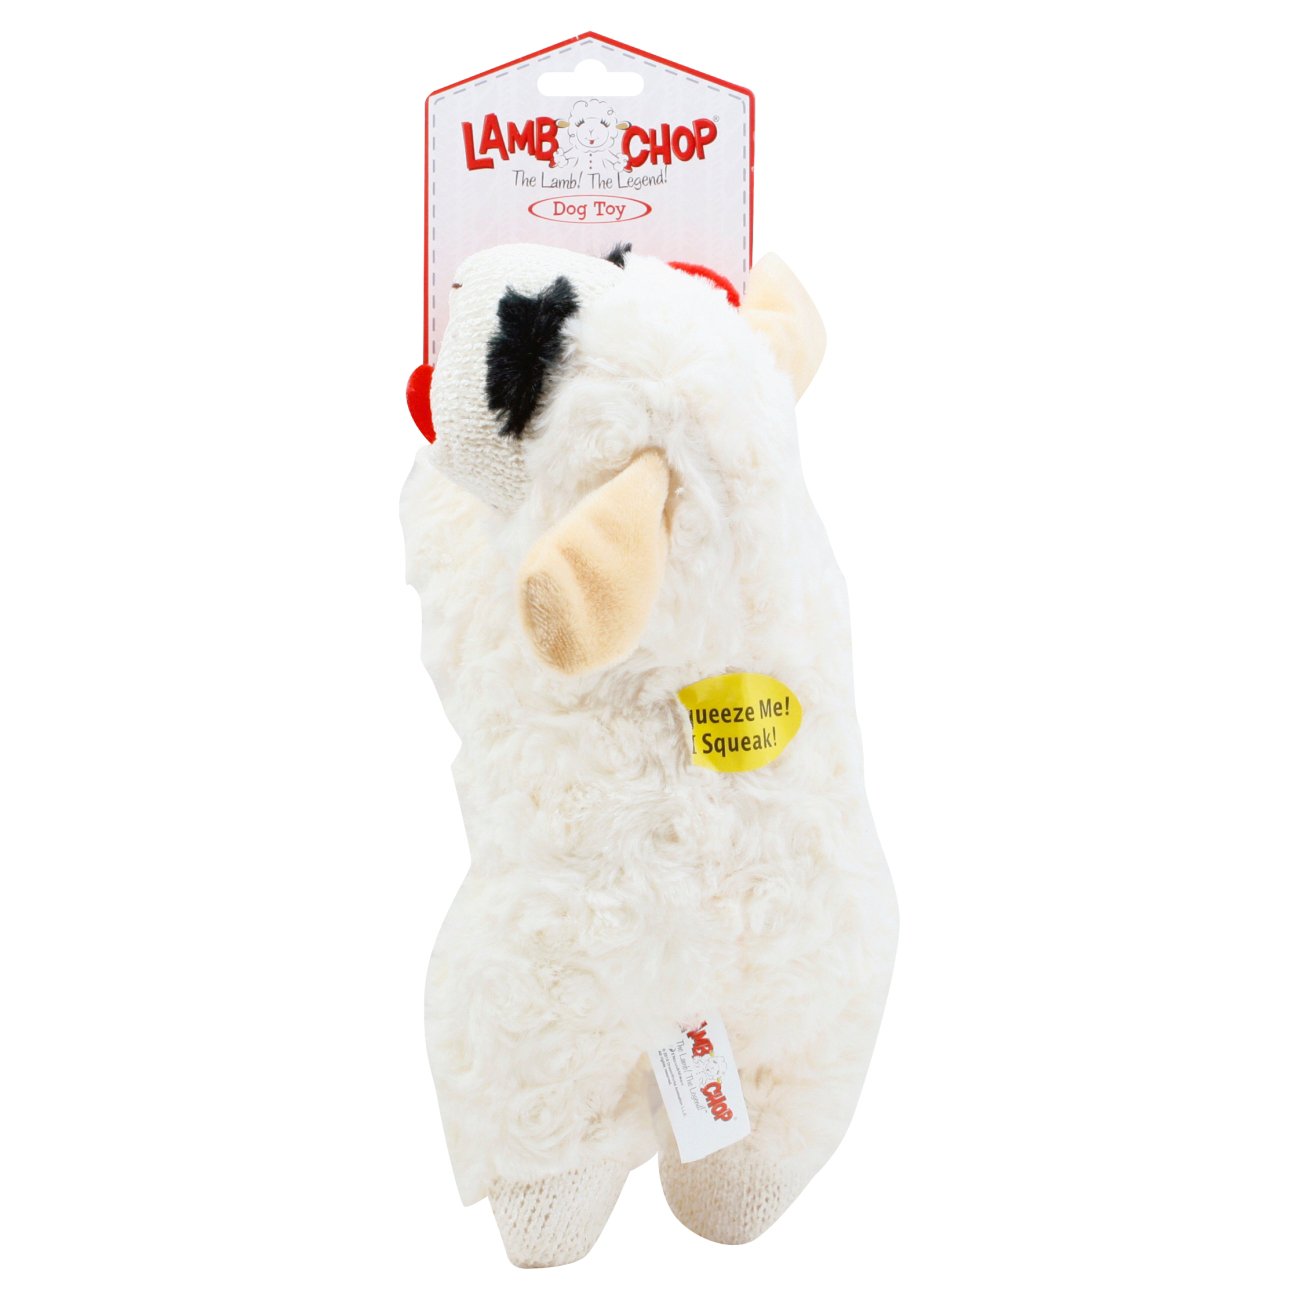 lamb chop dog